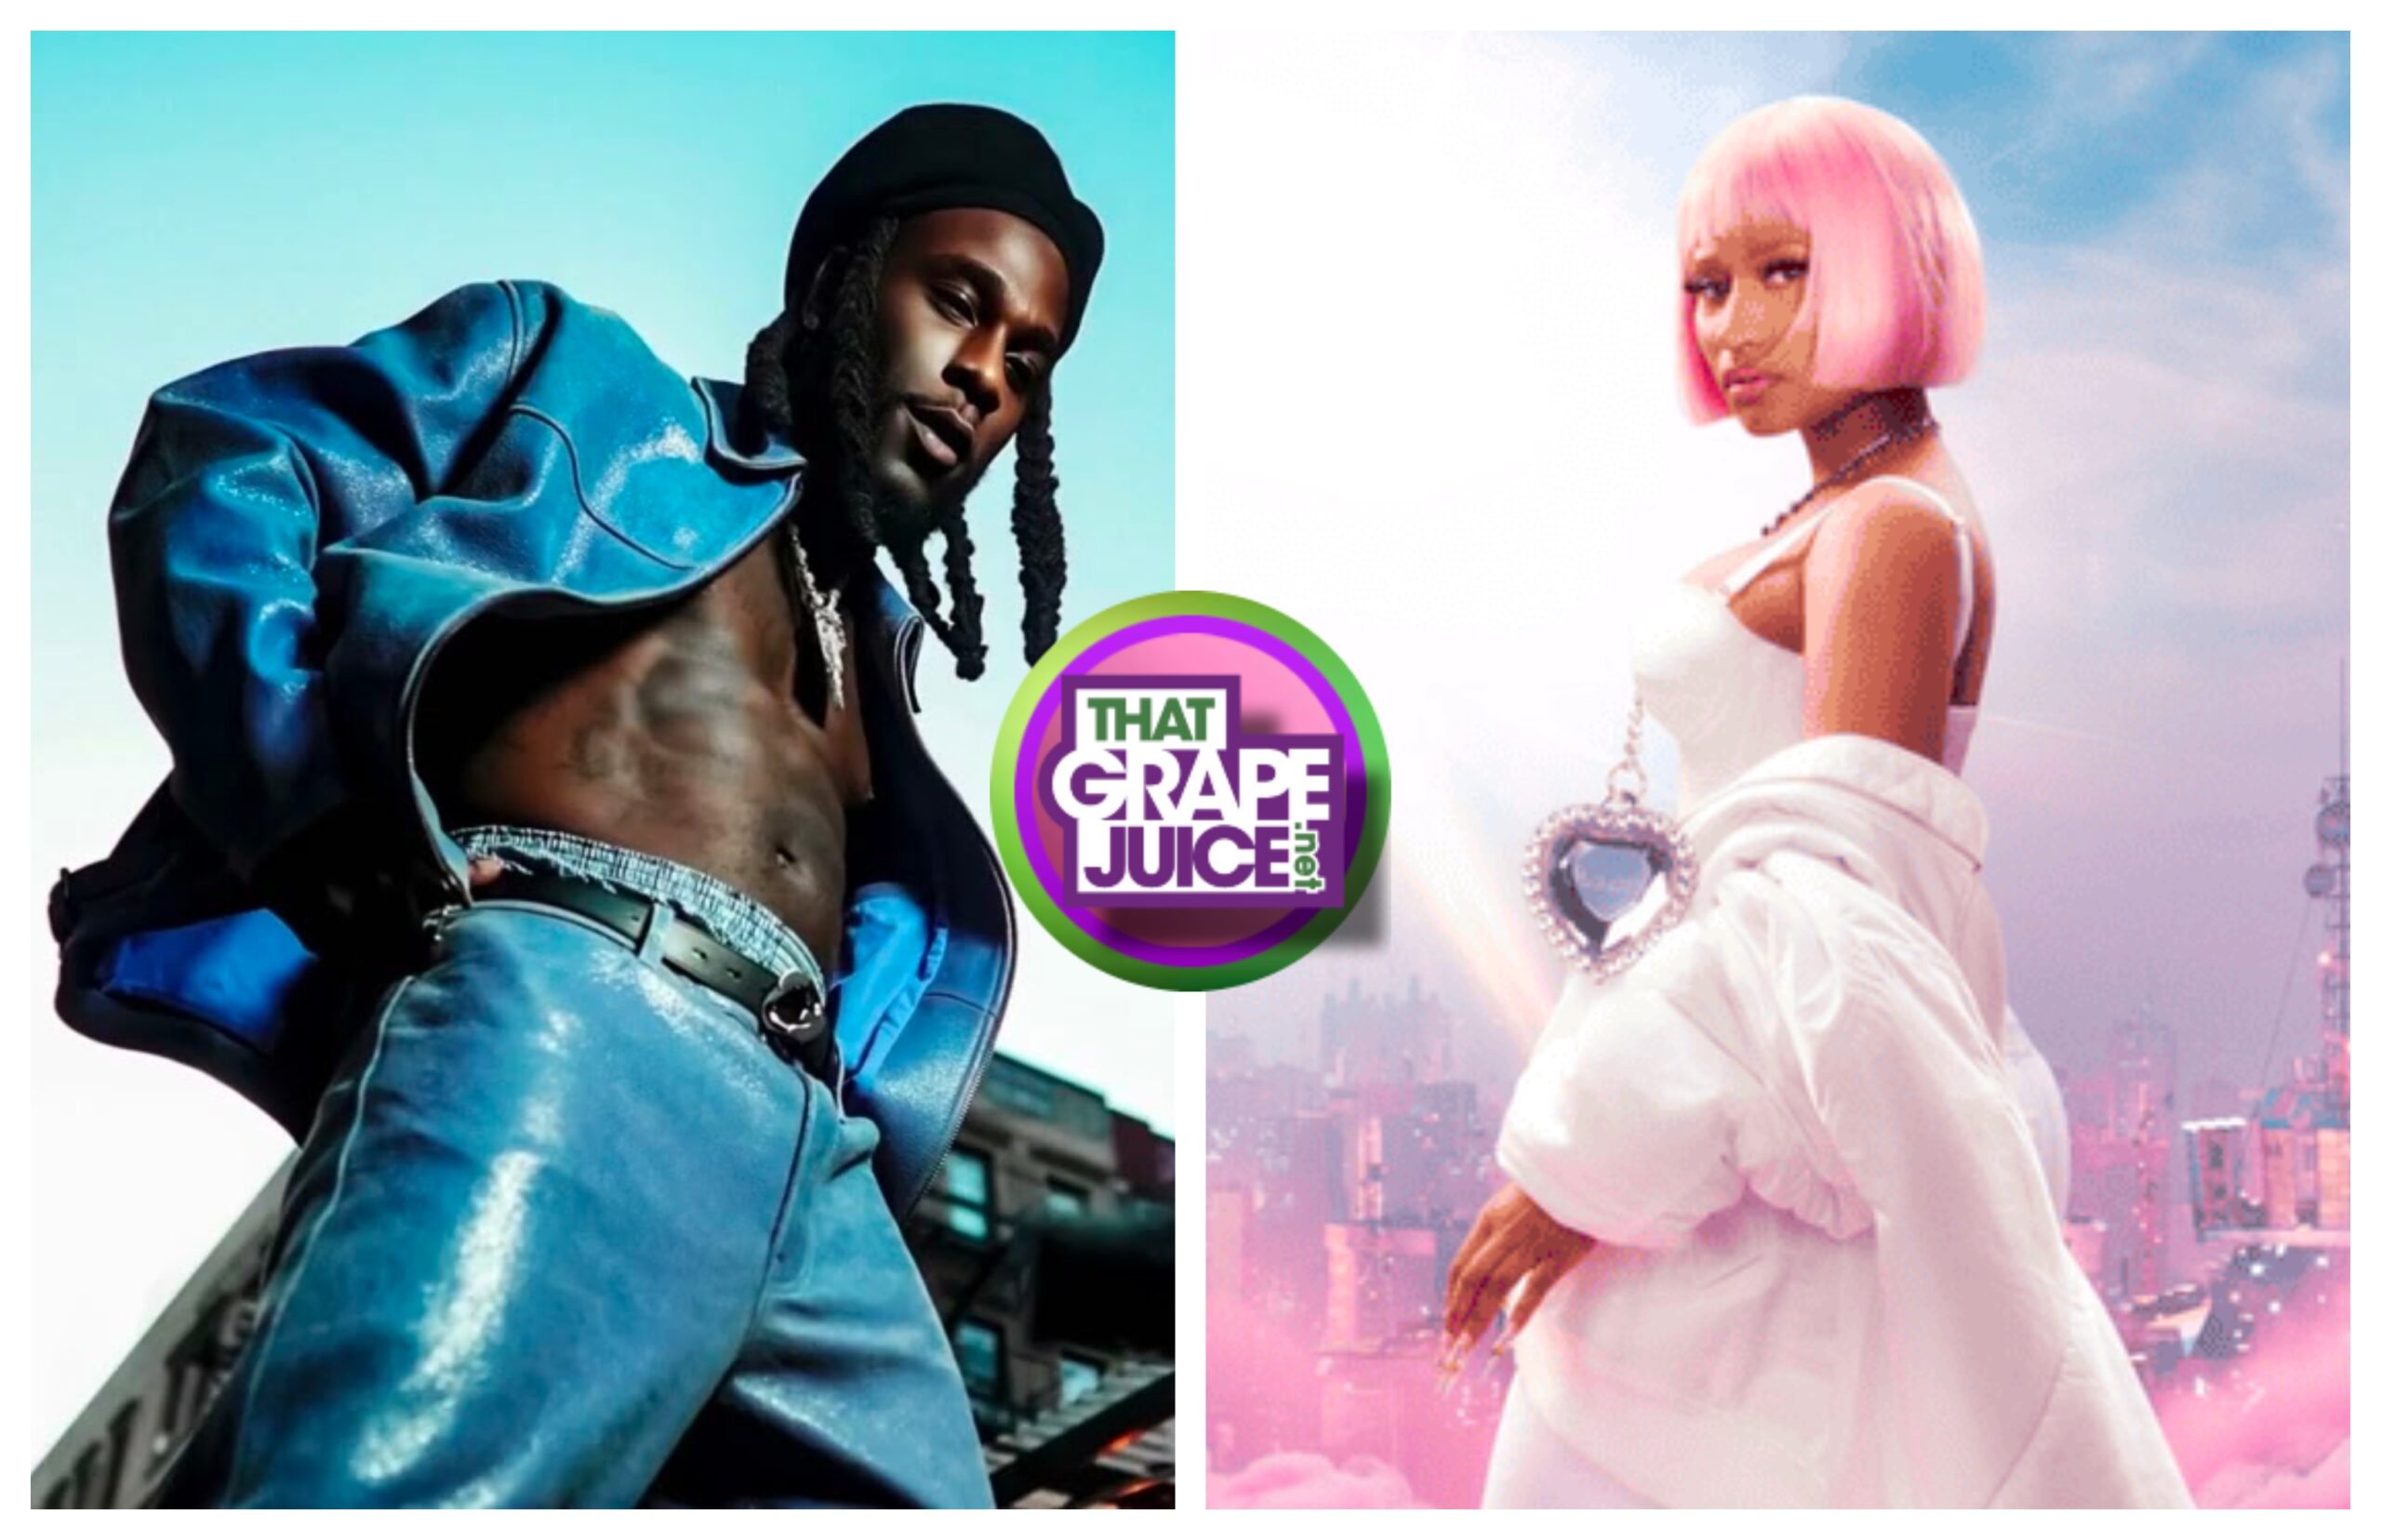 Nicki Minaj Teases Burna Boy Collaboration [Listen]